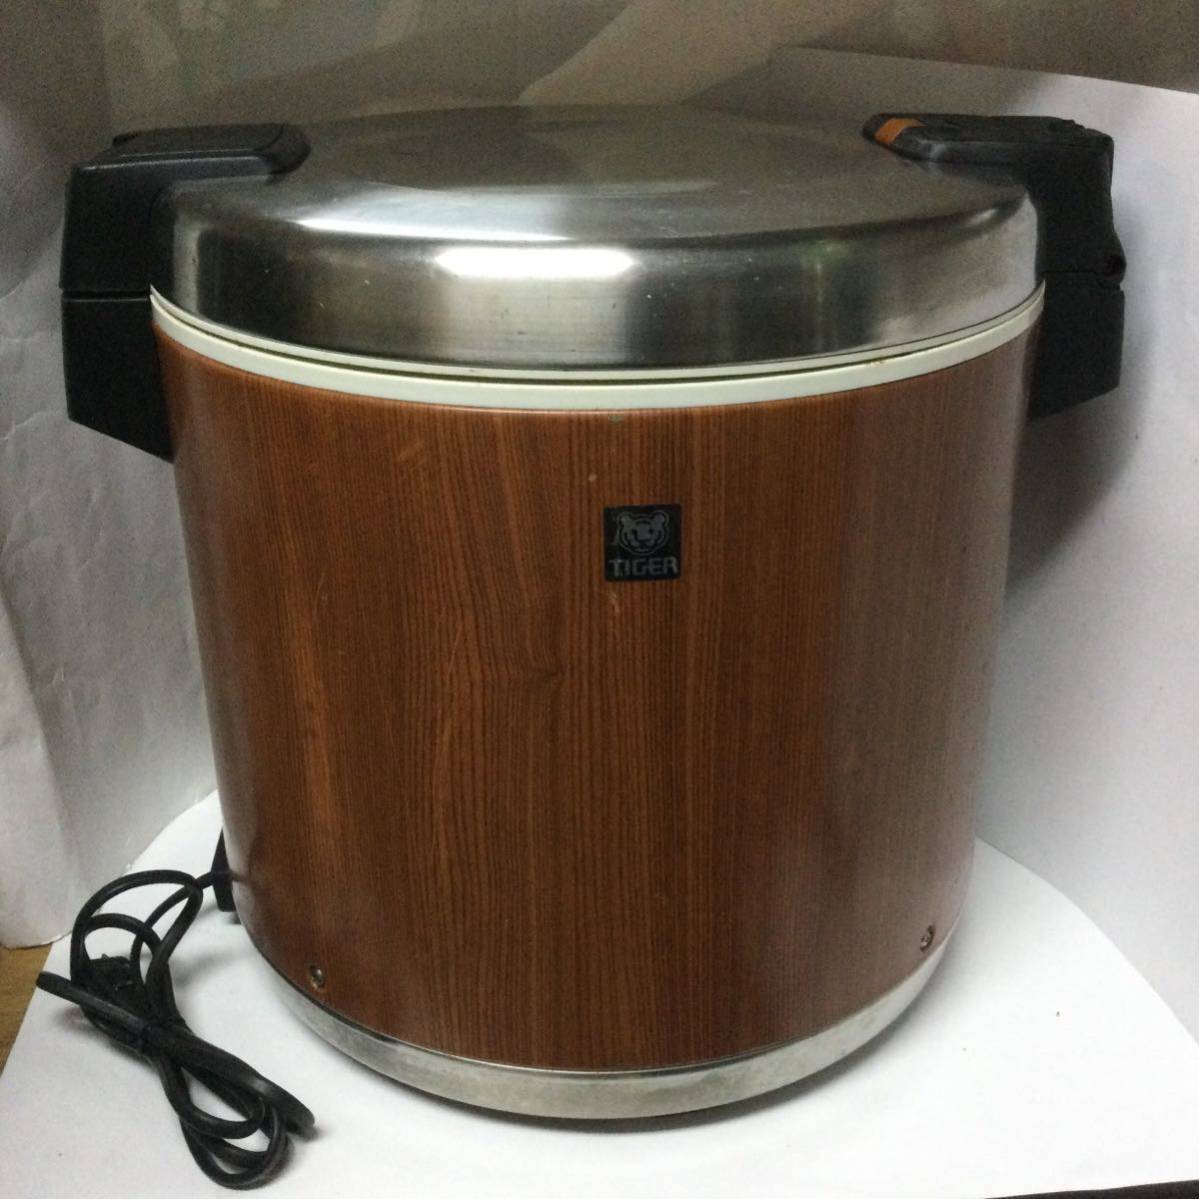 TIGER 電子ジャJHC-9000タイガー 炊飯器